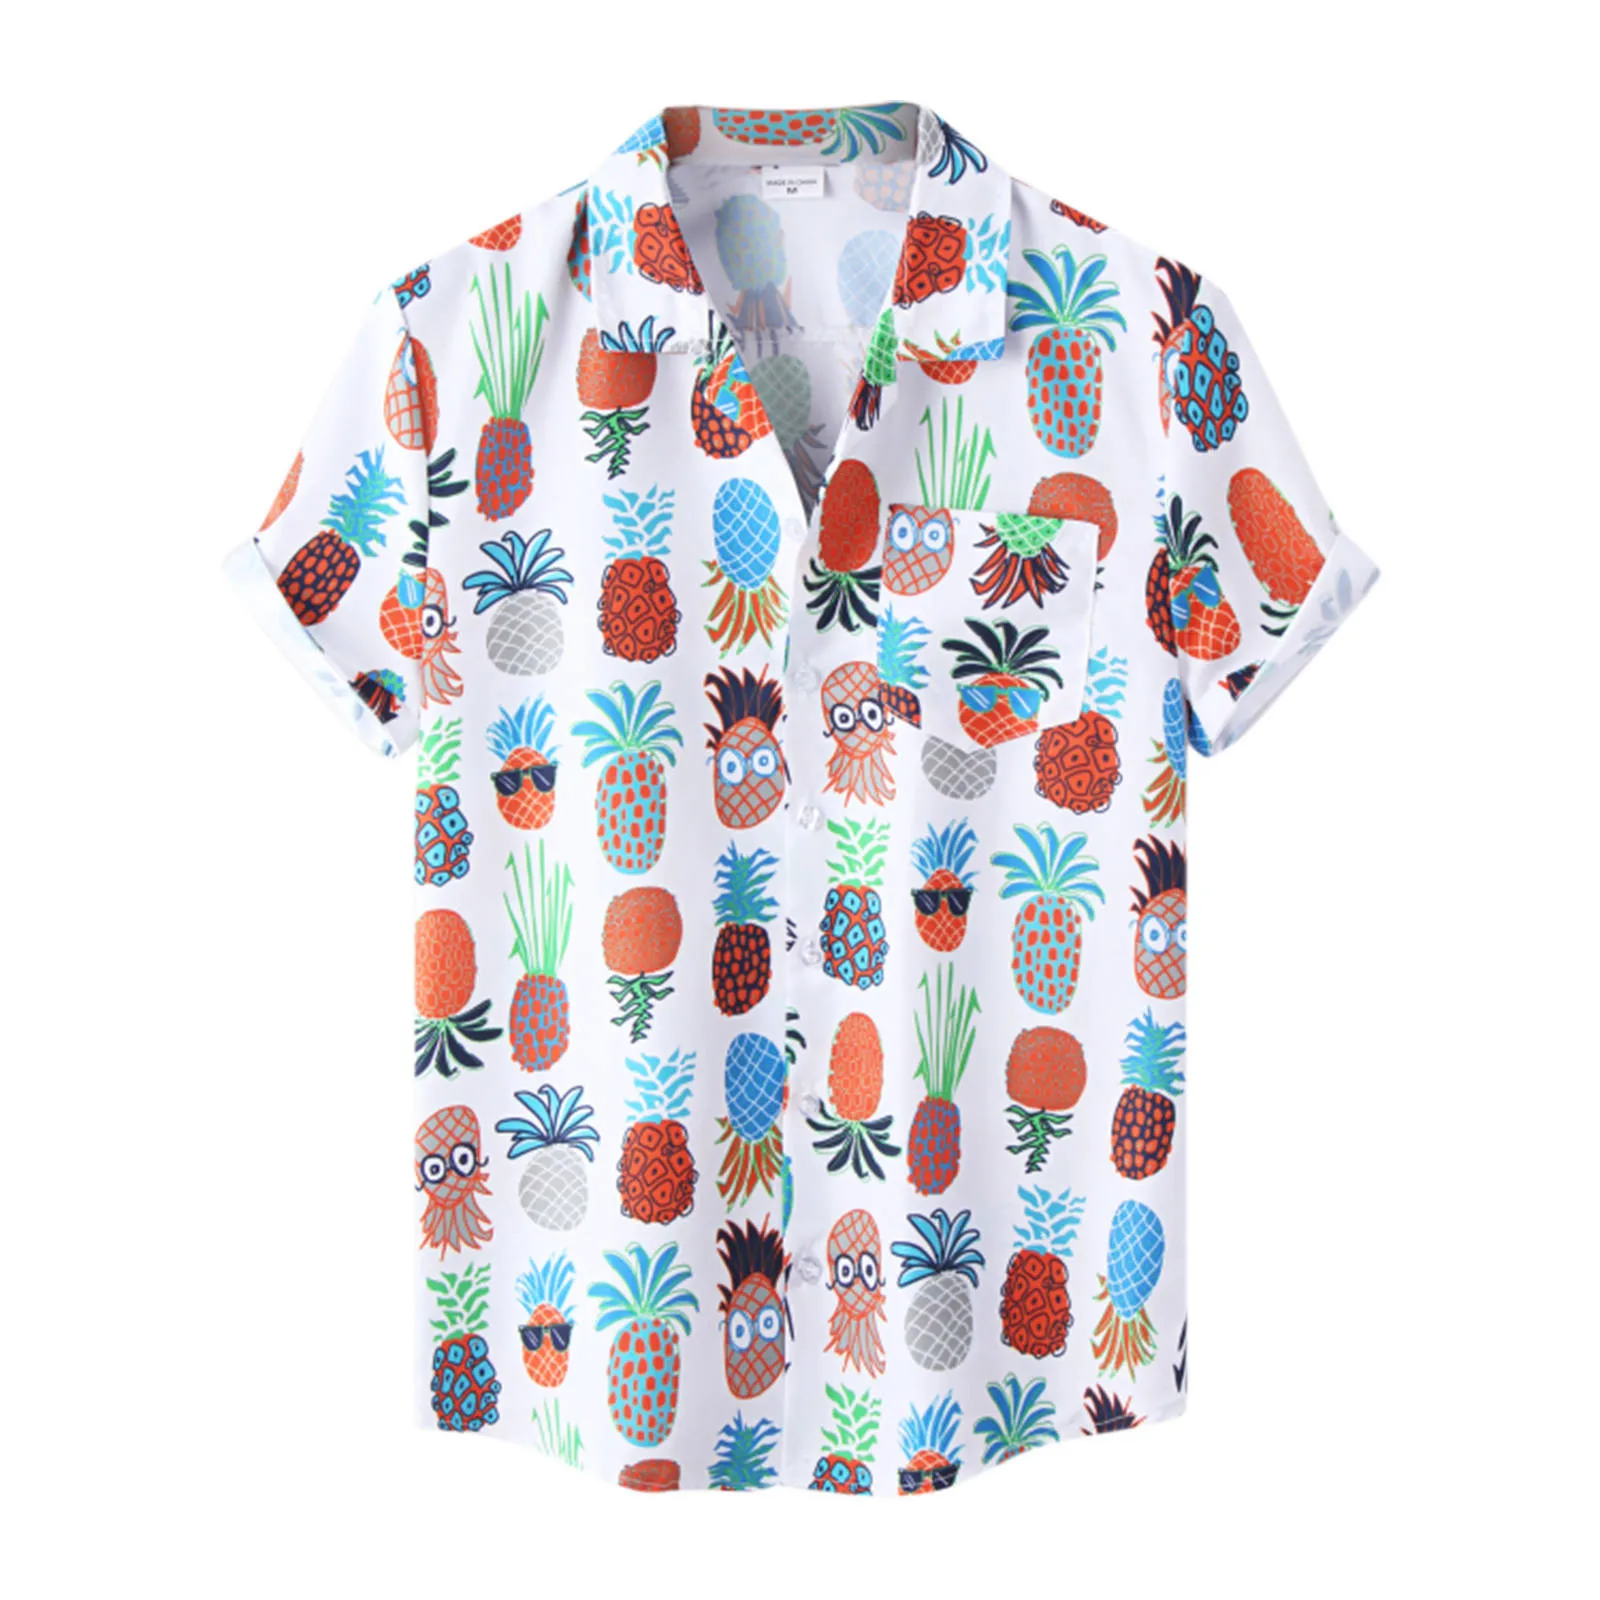 2022 Men's Hawaiian Shirt Men Lemon Print Short Sleeve Fresh Green Shirt Lapel Single Button Shirt Casual Beach Shirts Chemise